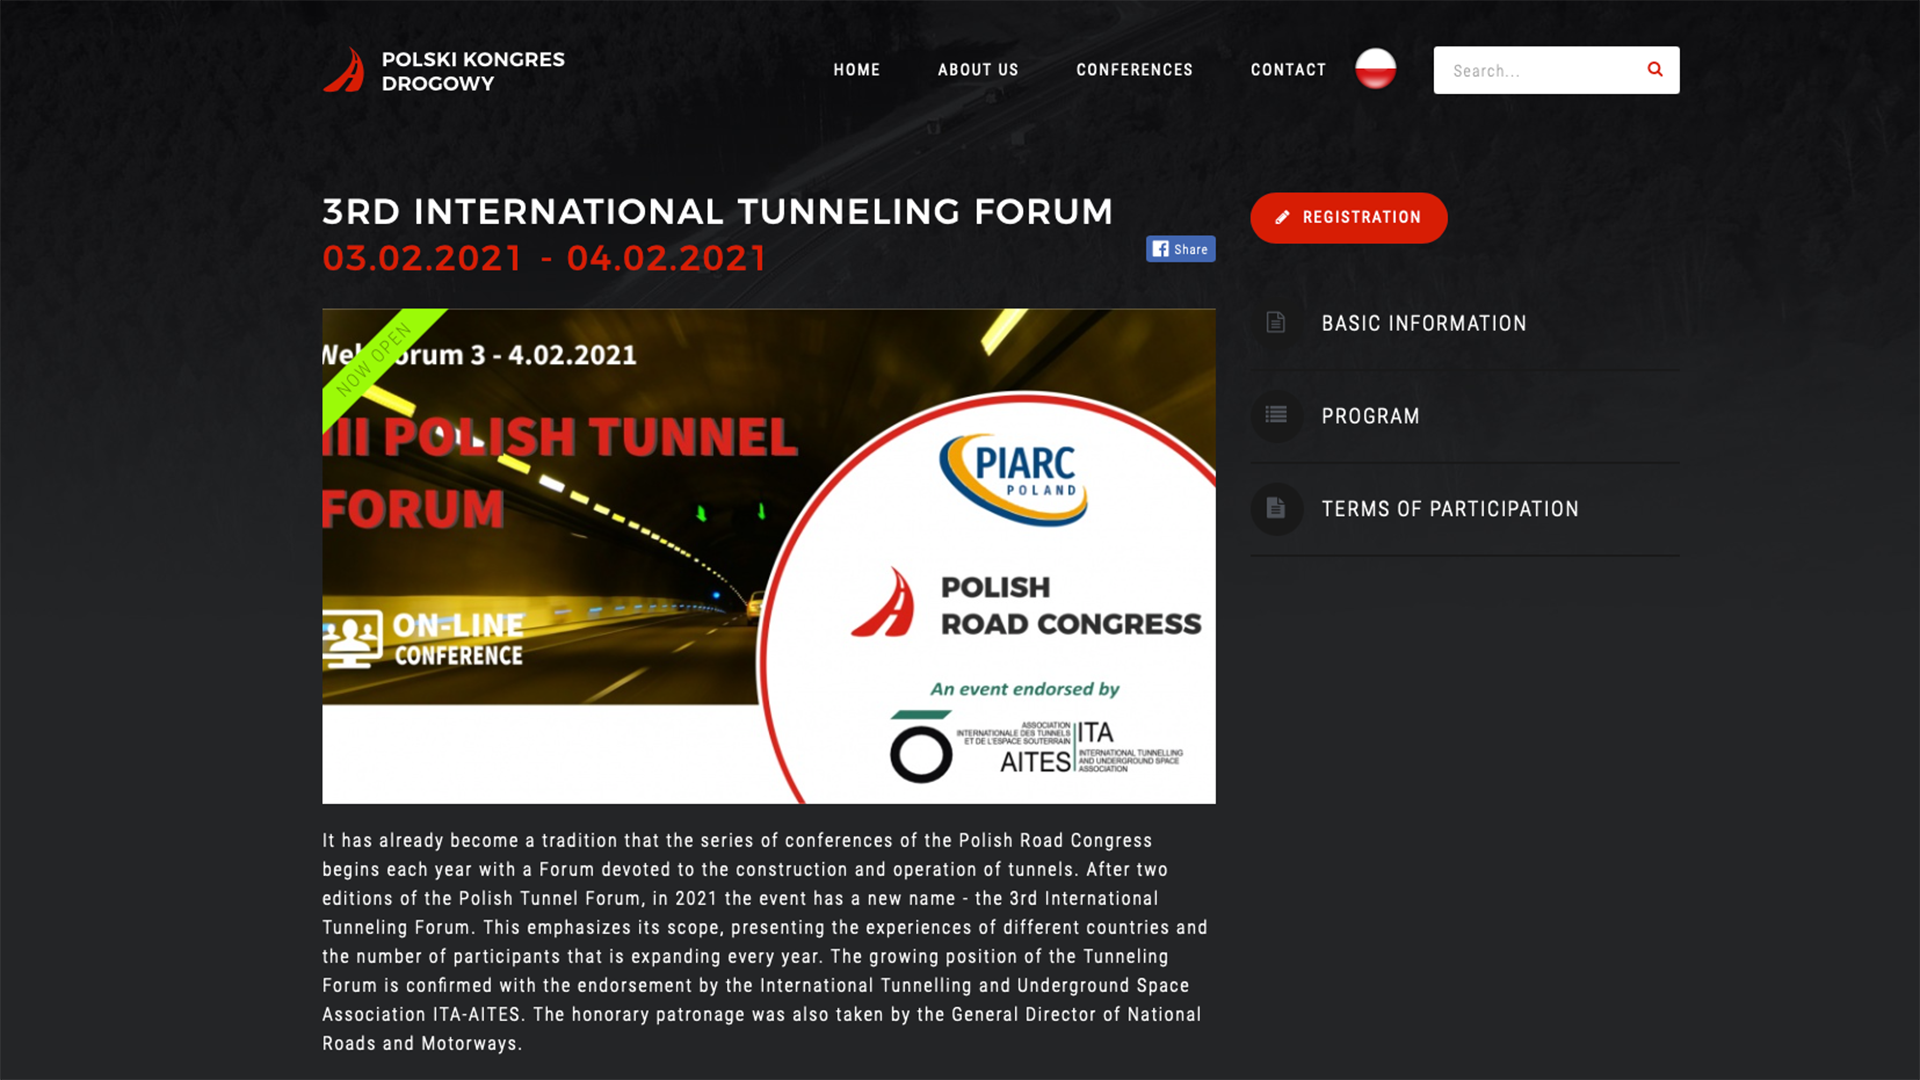 Feb. 2021: 3rd International Tunneling Forum